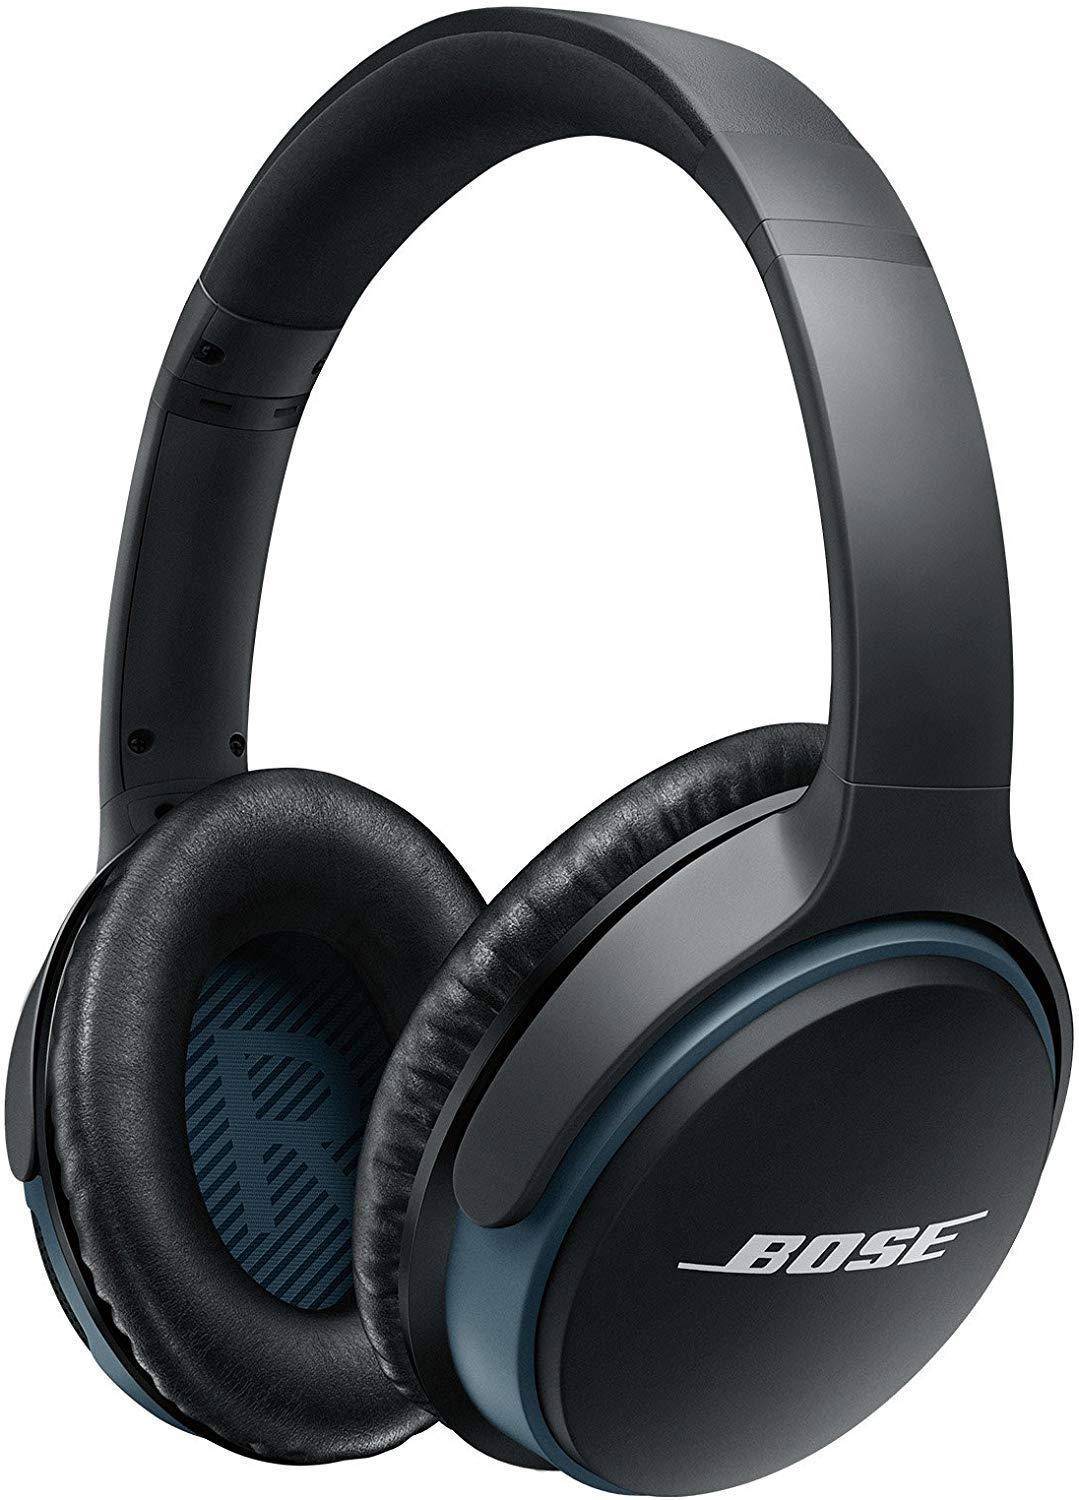 Bose SoundLink® Around-Ear Wireless Headphones II With Mic zoom image